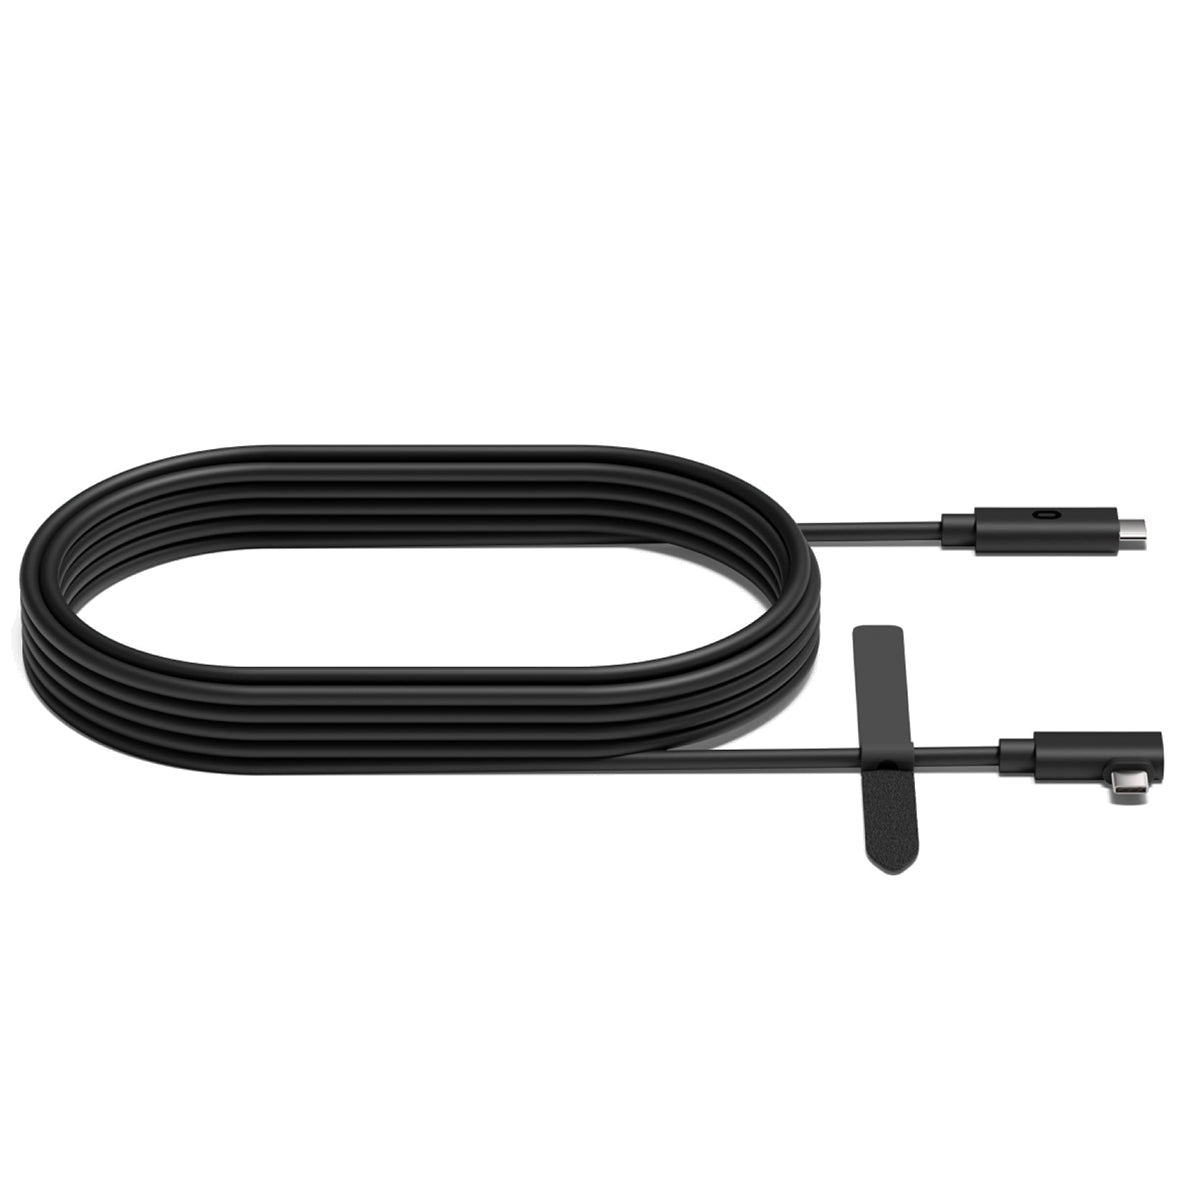 Cable Meta Link (301-00311-01) : compatible con Quest 3